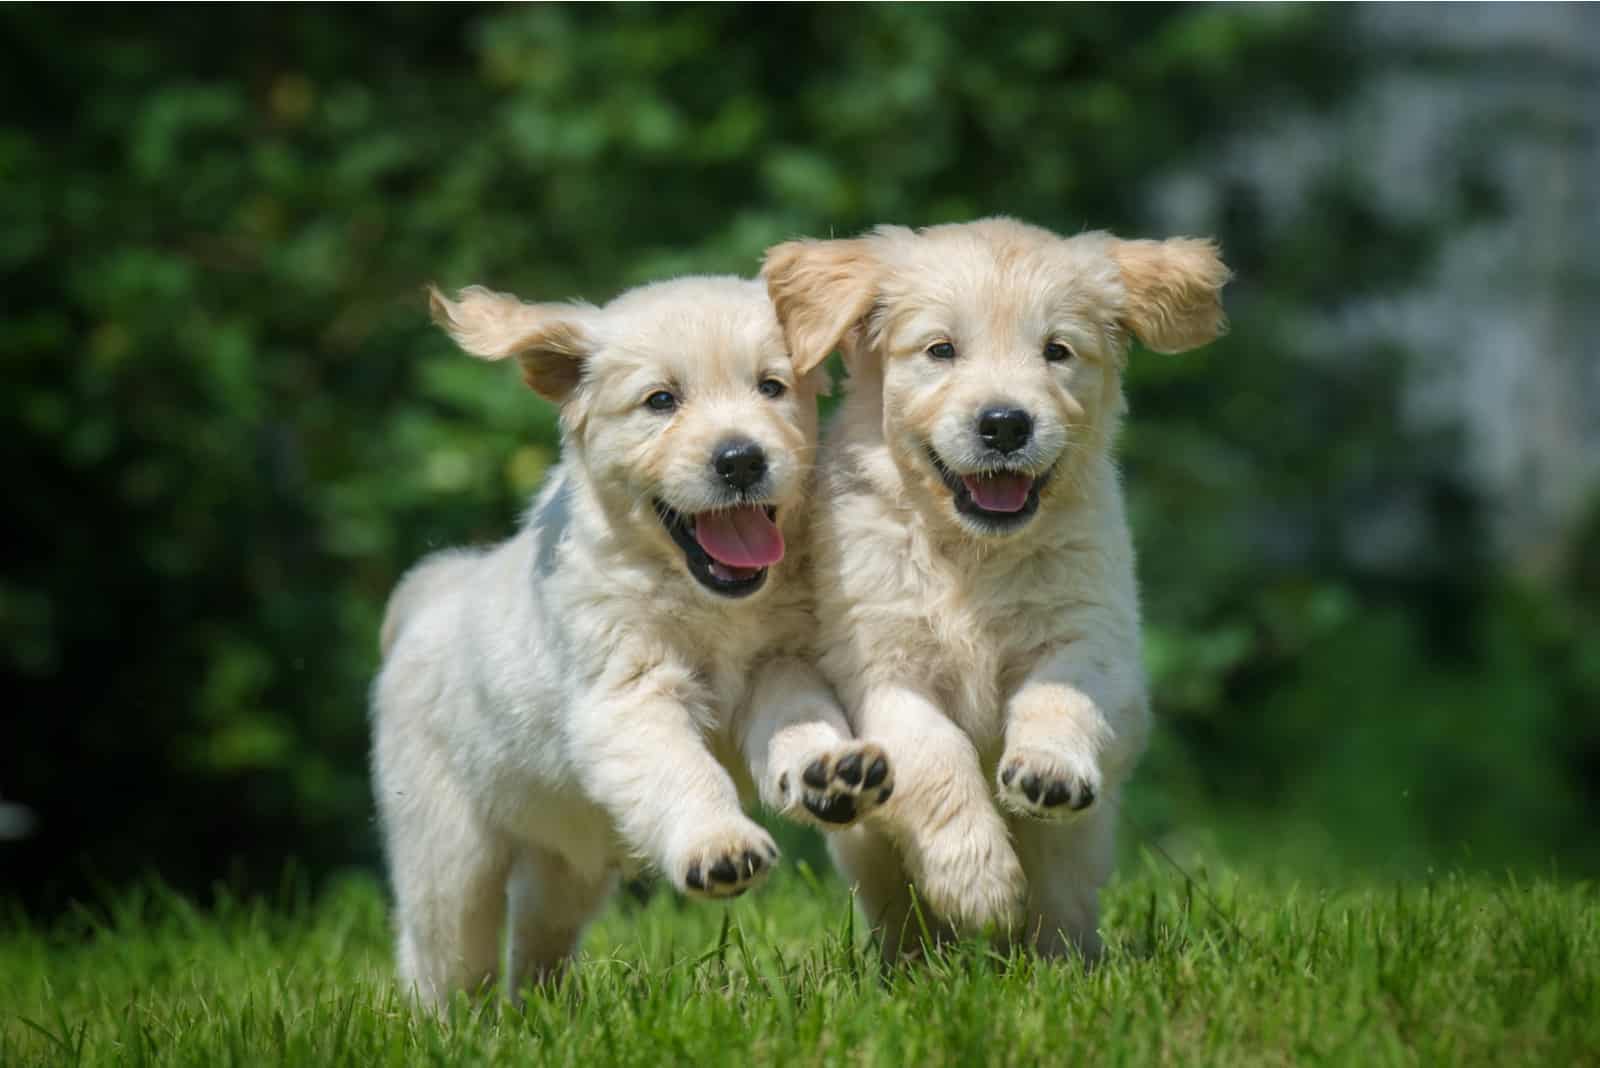 adorable golden retriever puppies running on the grass